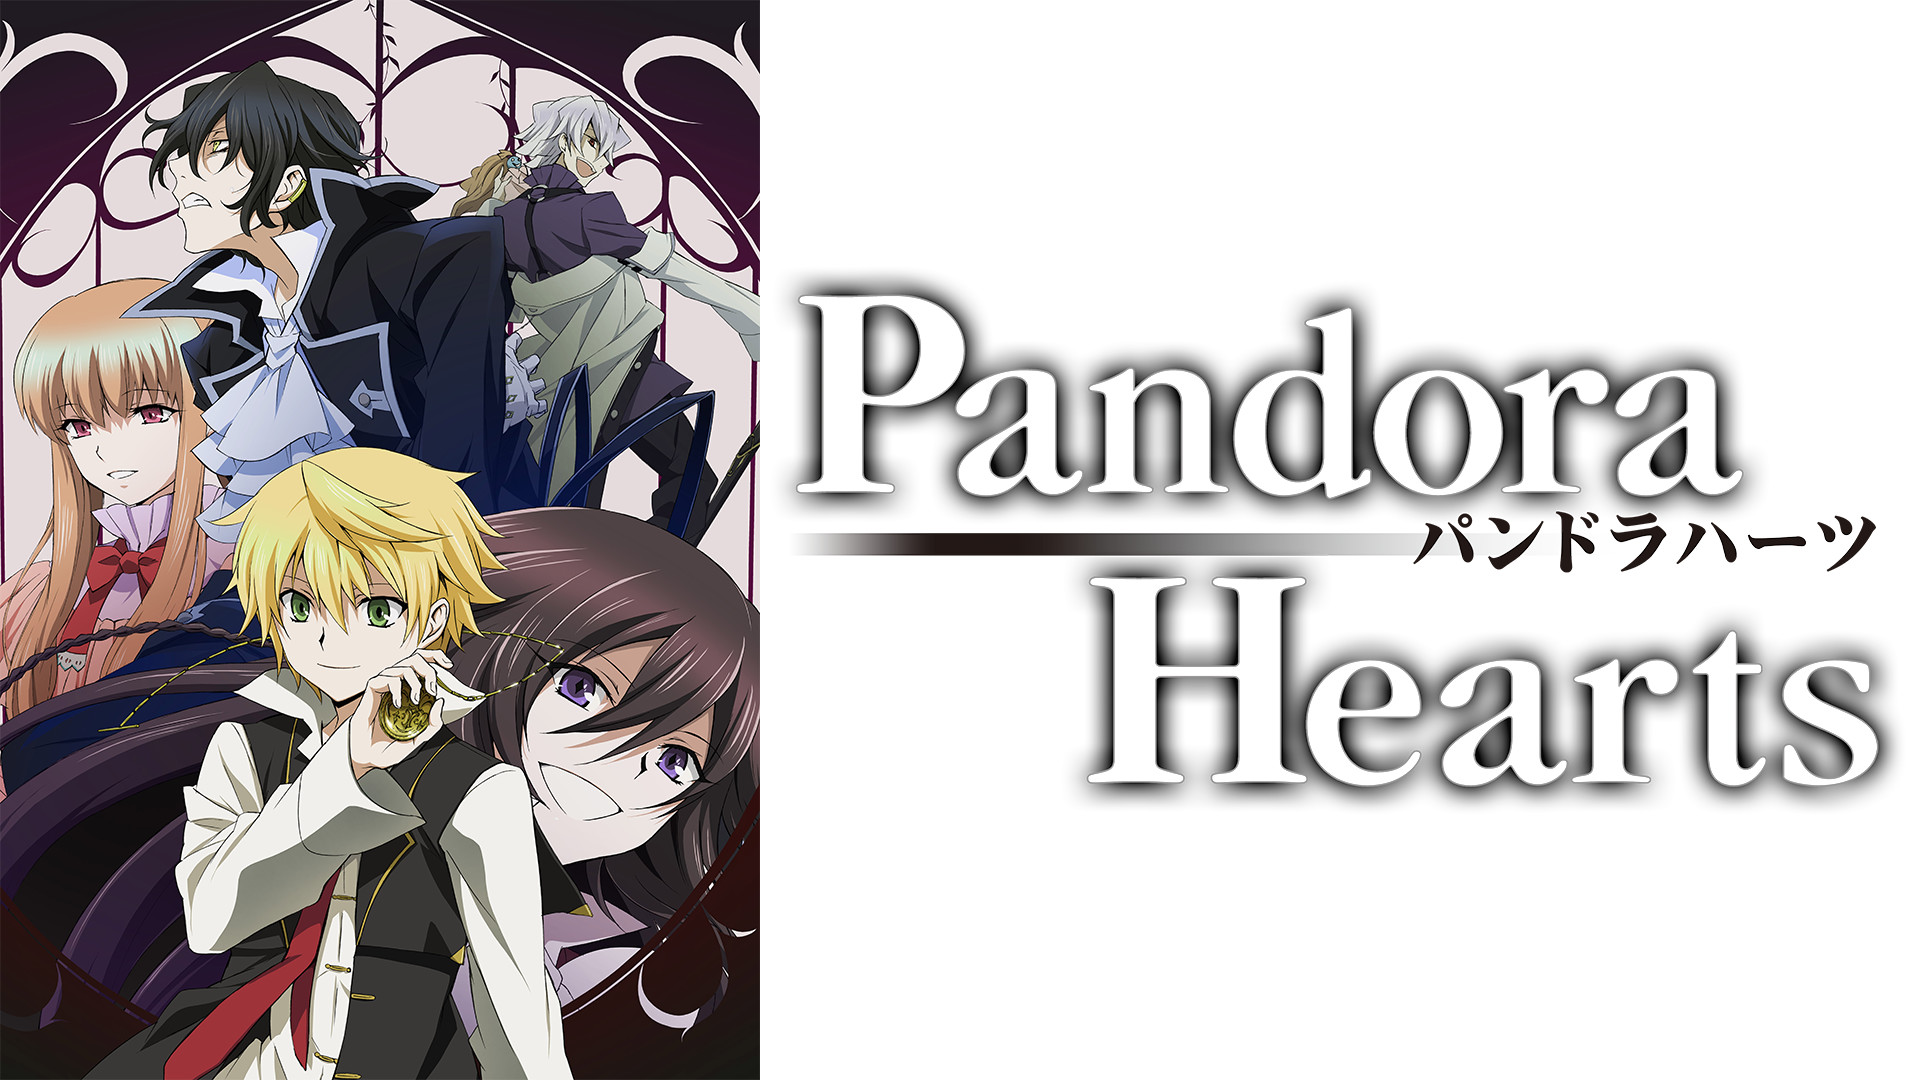 Pandorahearts アニメ動画見放題 Dアニメストア